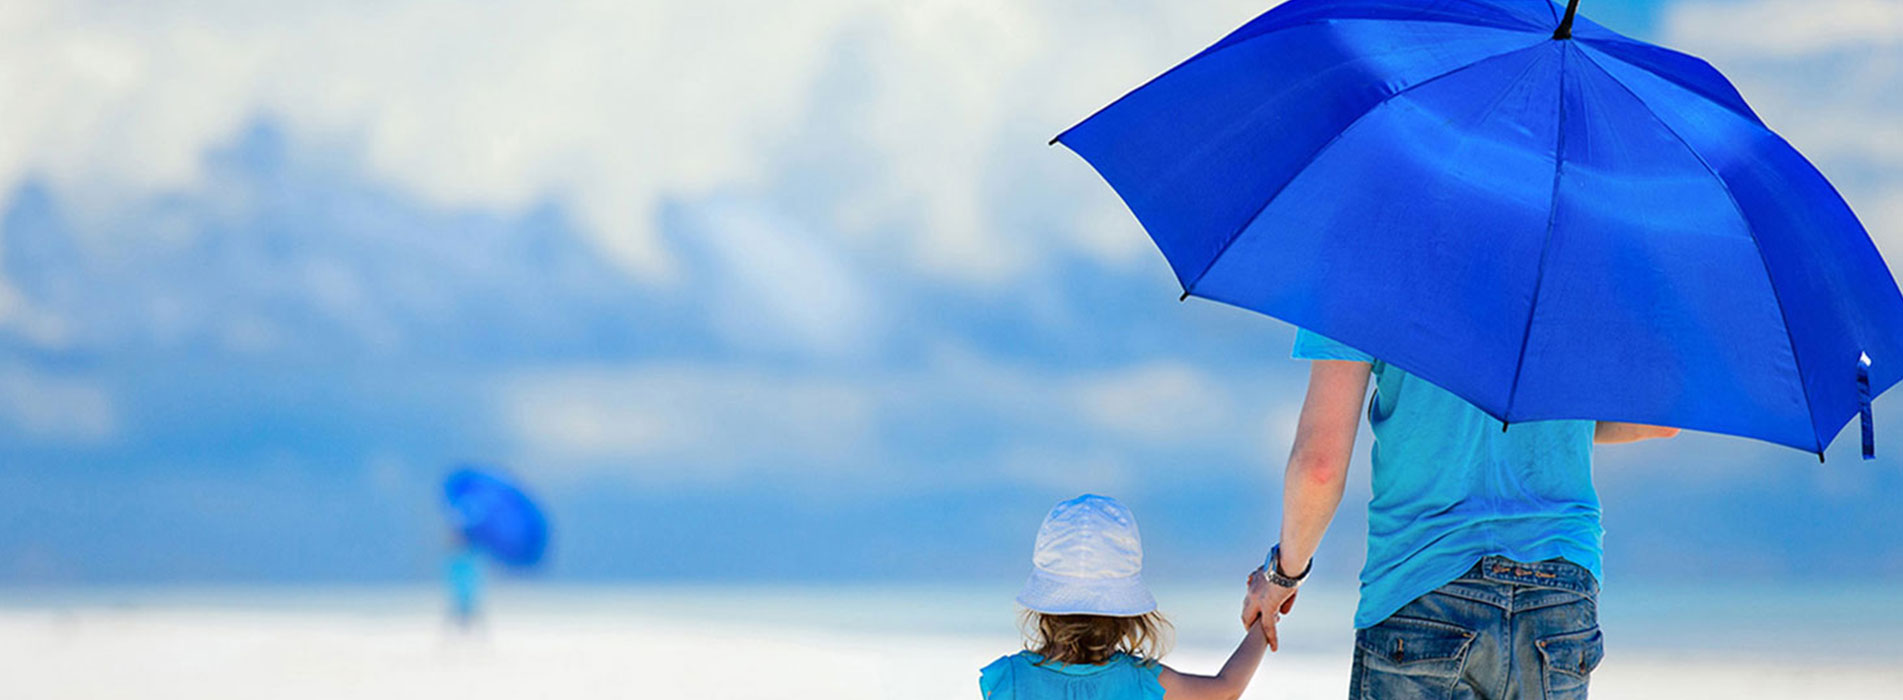 Florida Umbrella Insurance Coverage